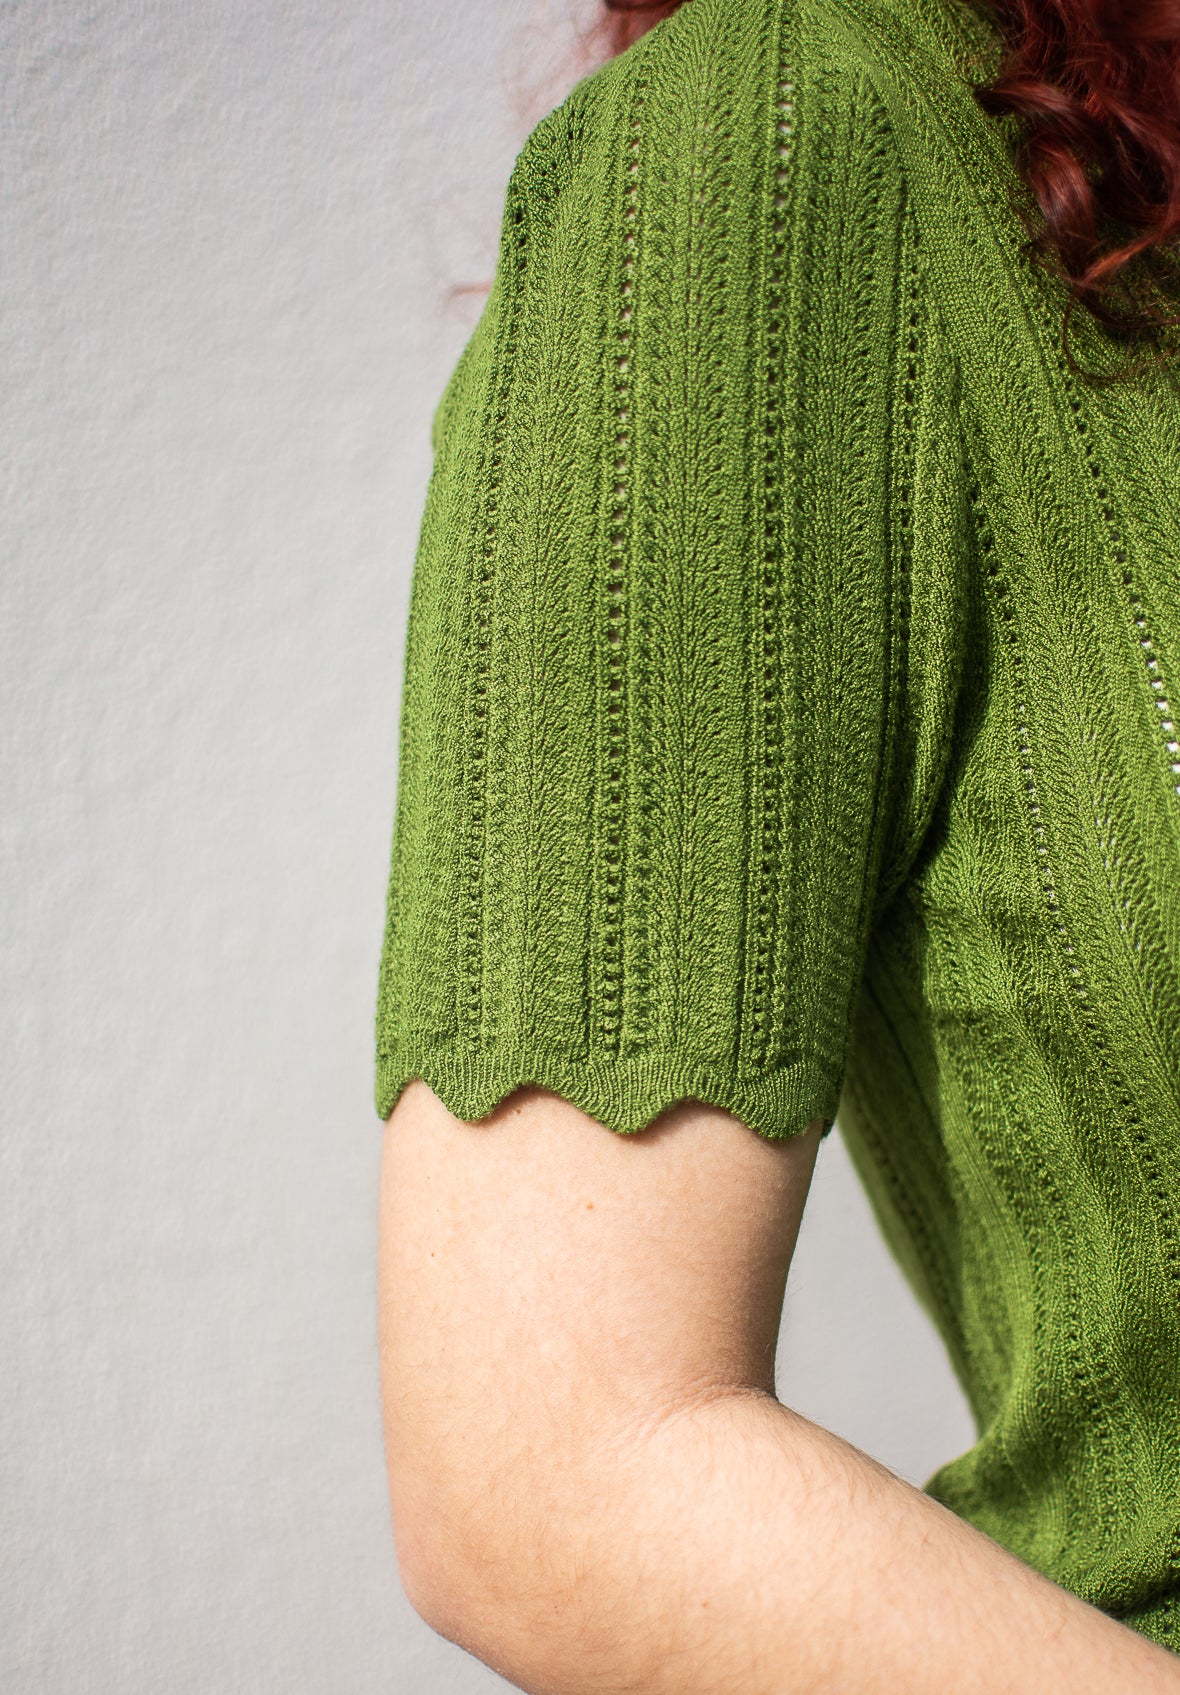 Scallop Edge Crotchet Knit Top - Green